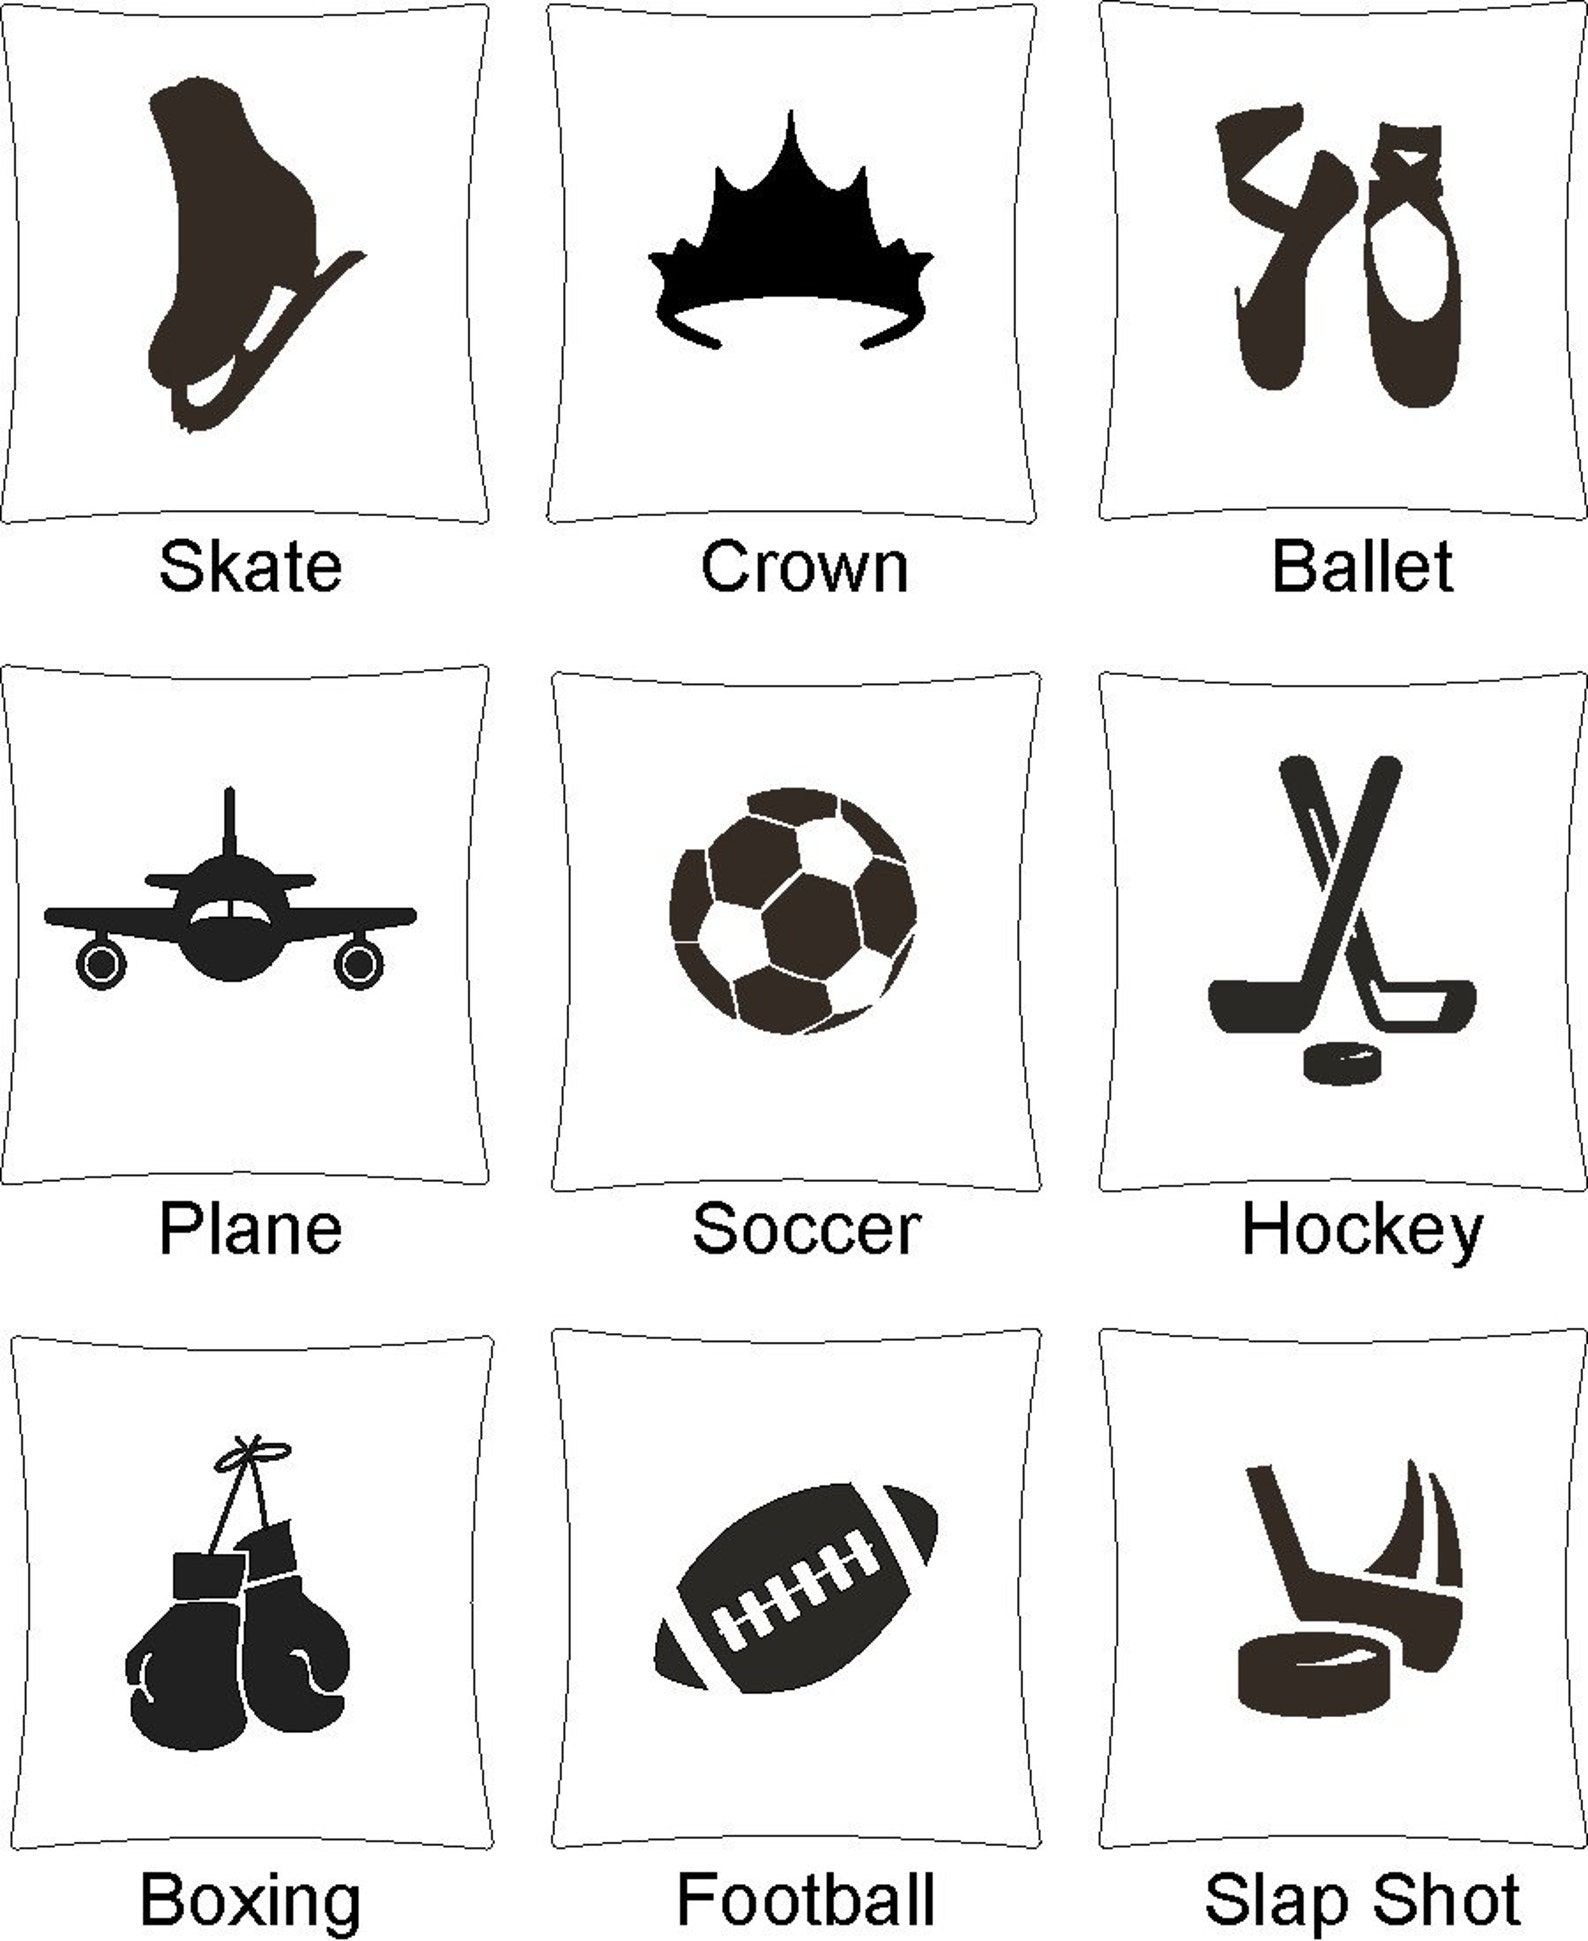 custom cushion cover with hand cut icon - hockey, boxing, soccer, football, skating, ballet and princess